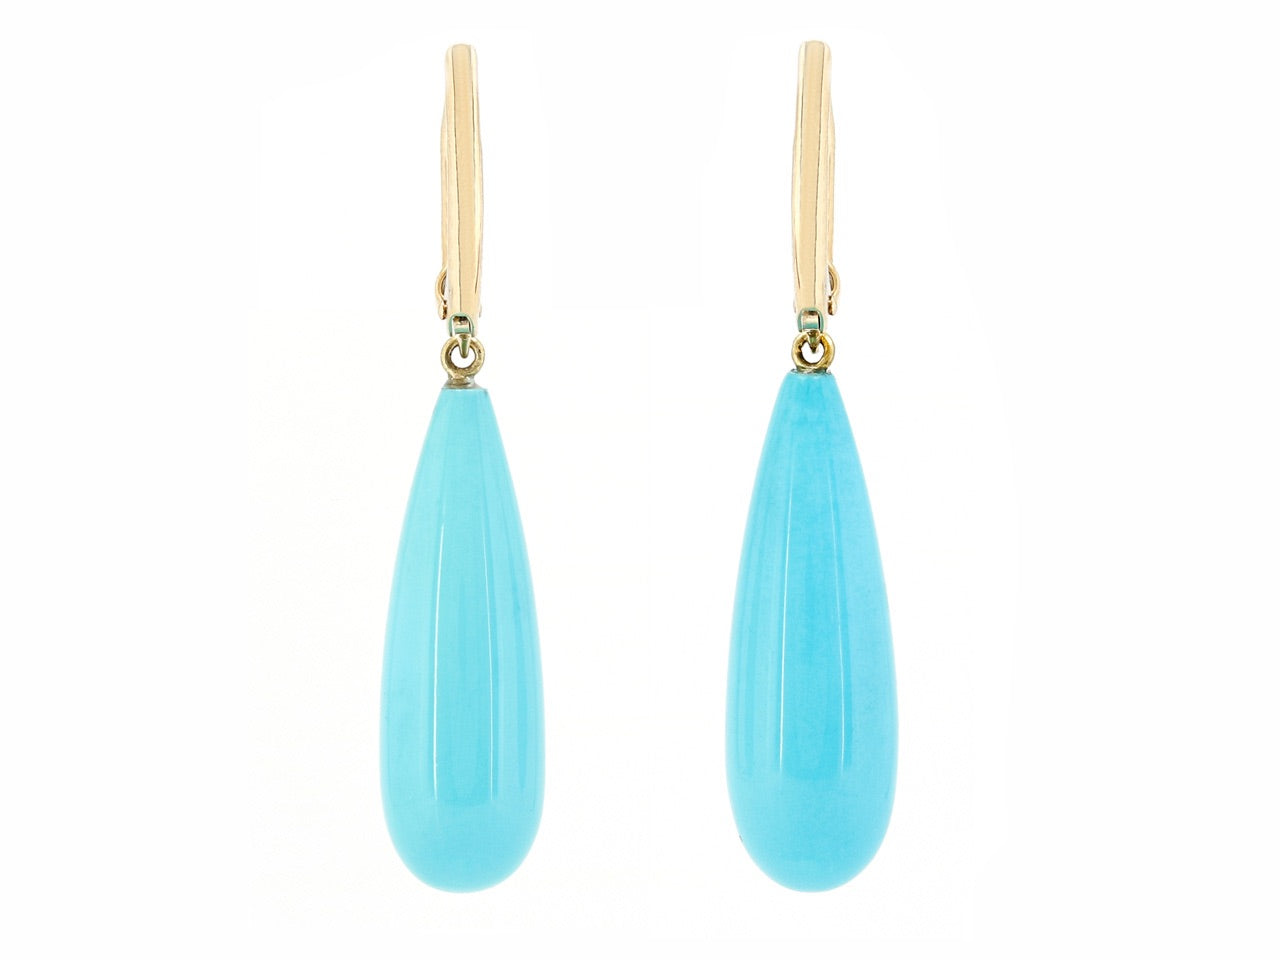 Beladora 'Bespoke' Turquoise and Diamond Dangle Earrings in 18K Gold